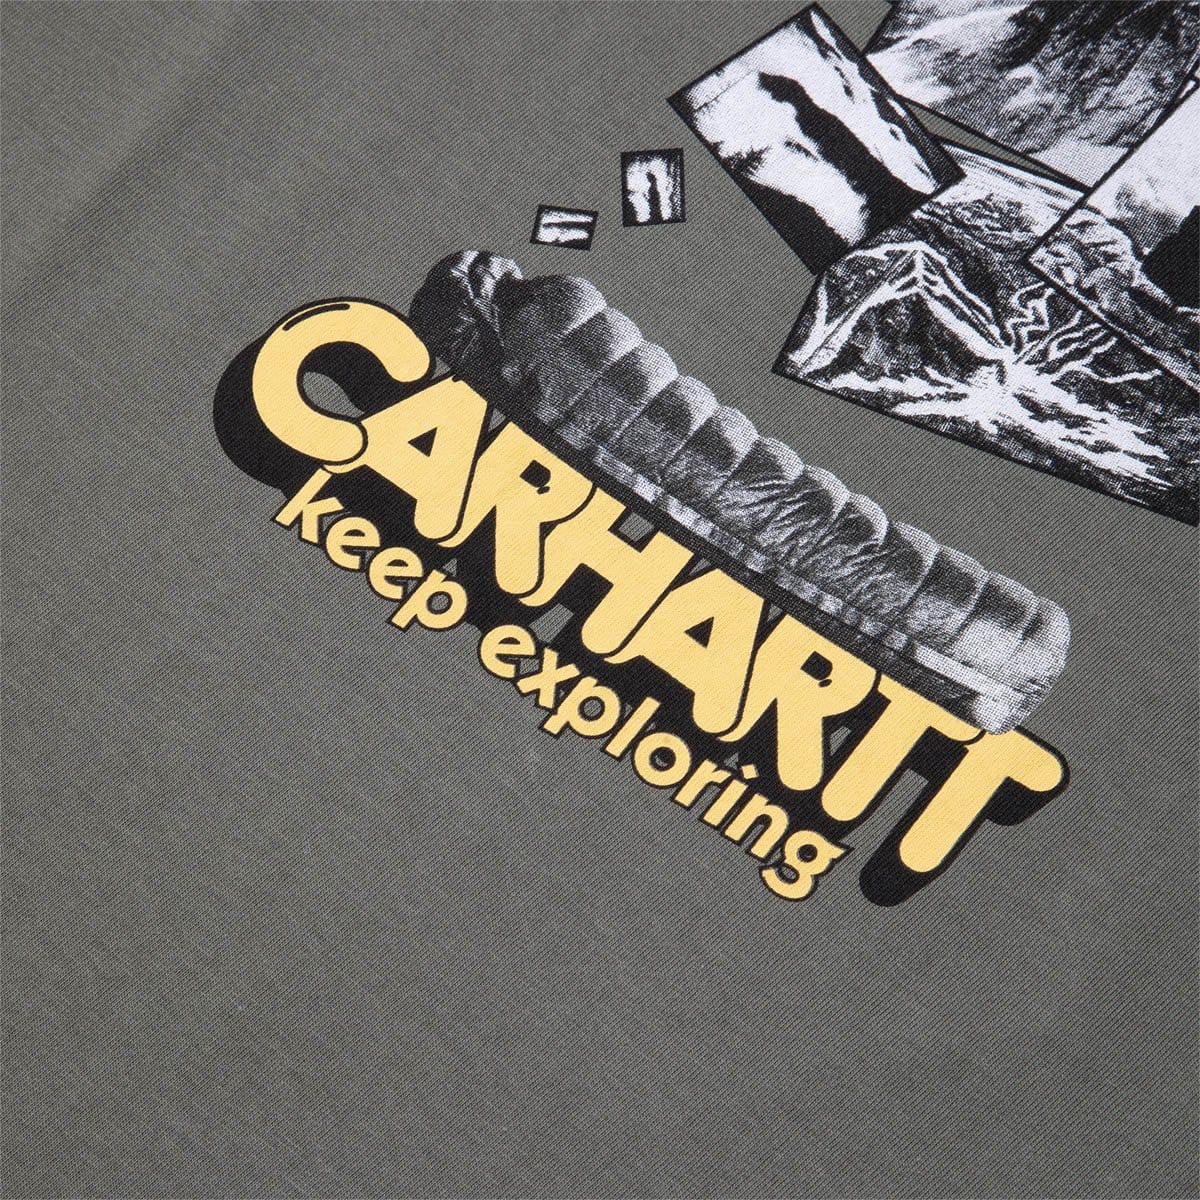 Carhartt W.I.P. T-Shirts EXPED T-SHIRT